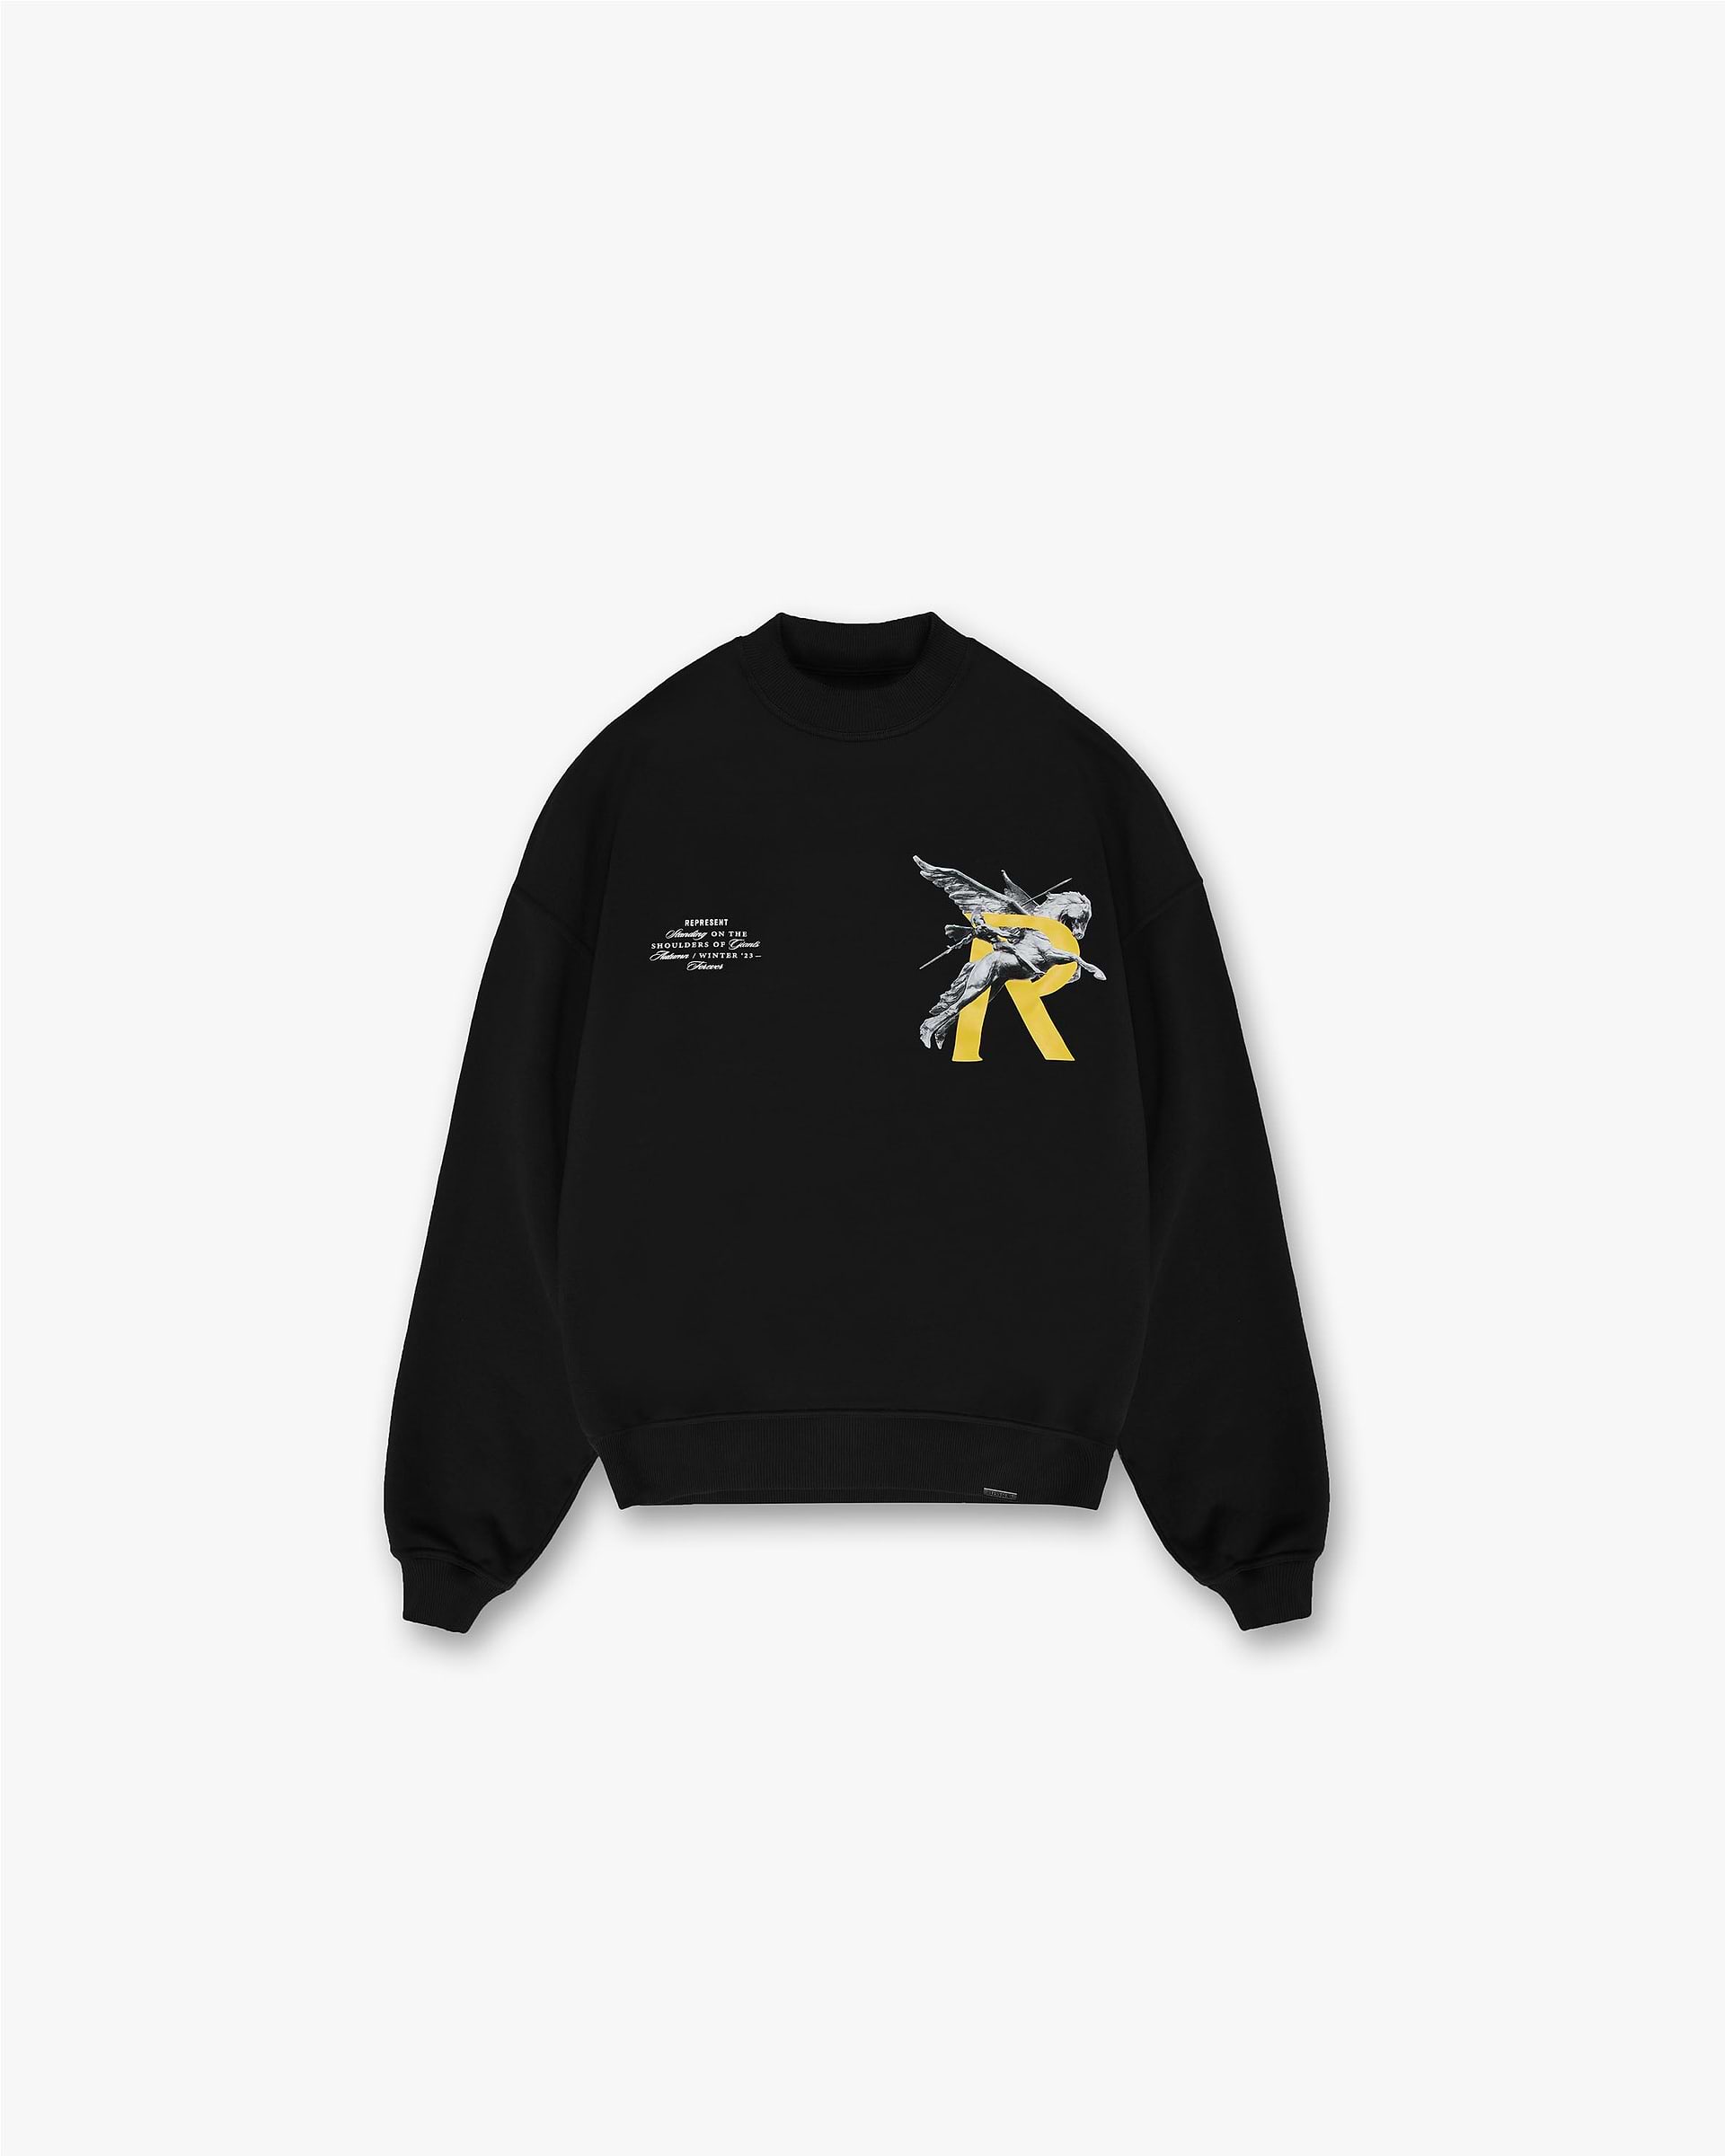 Giants Sweater | Jet Black Sweaters FW23 | Represent Clo